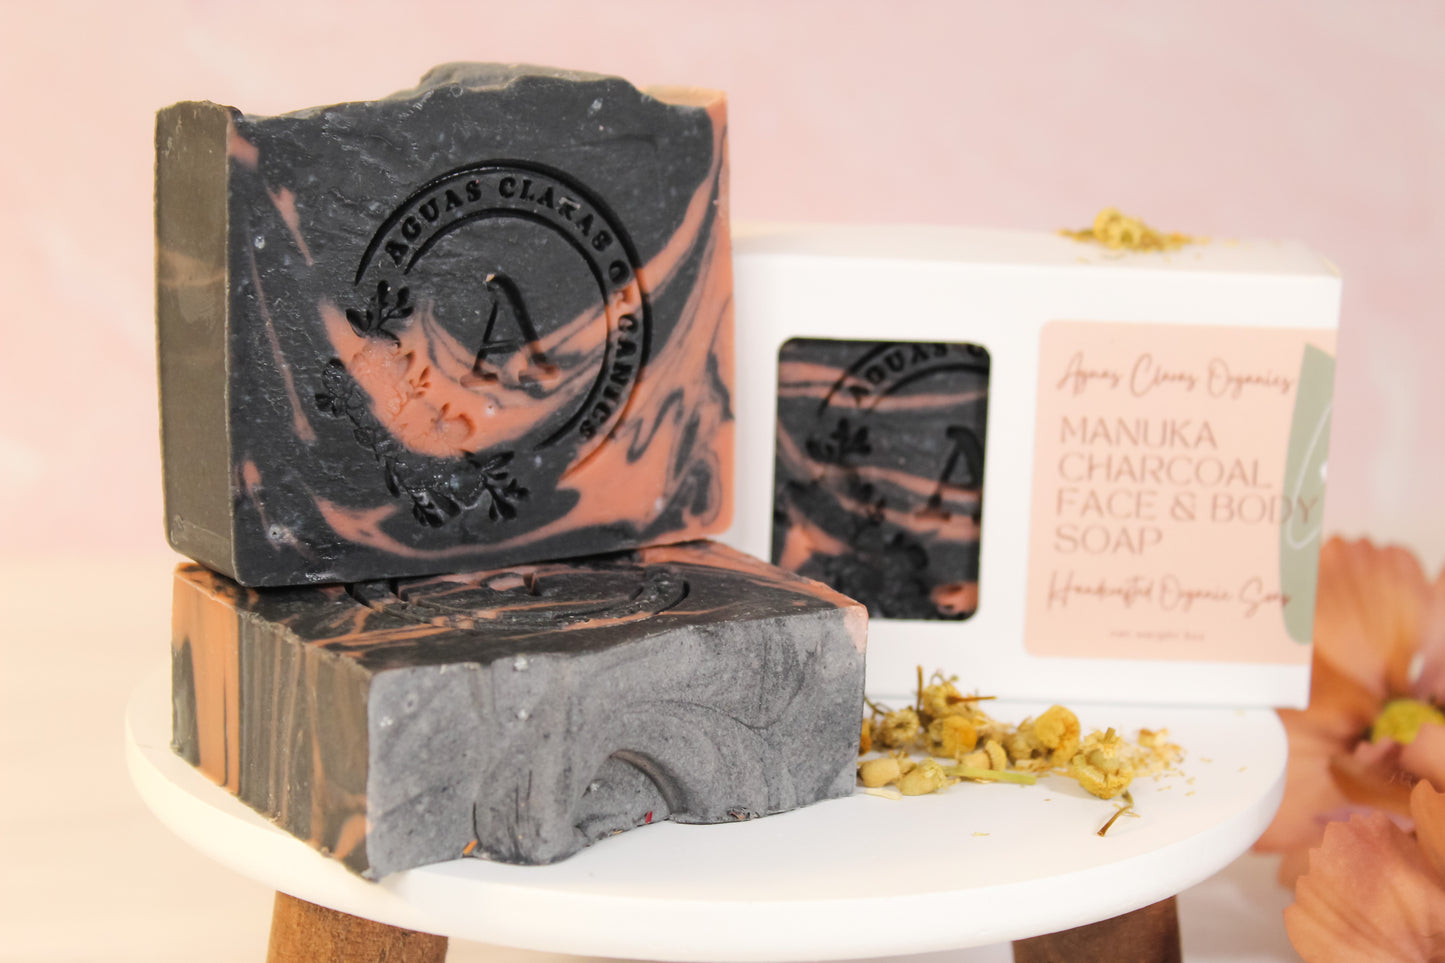 Manuka Charcoal Face & Body Soap - Tea Tree & Geranium Essential Oils